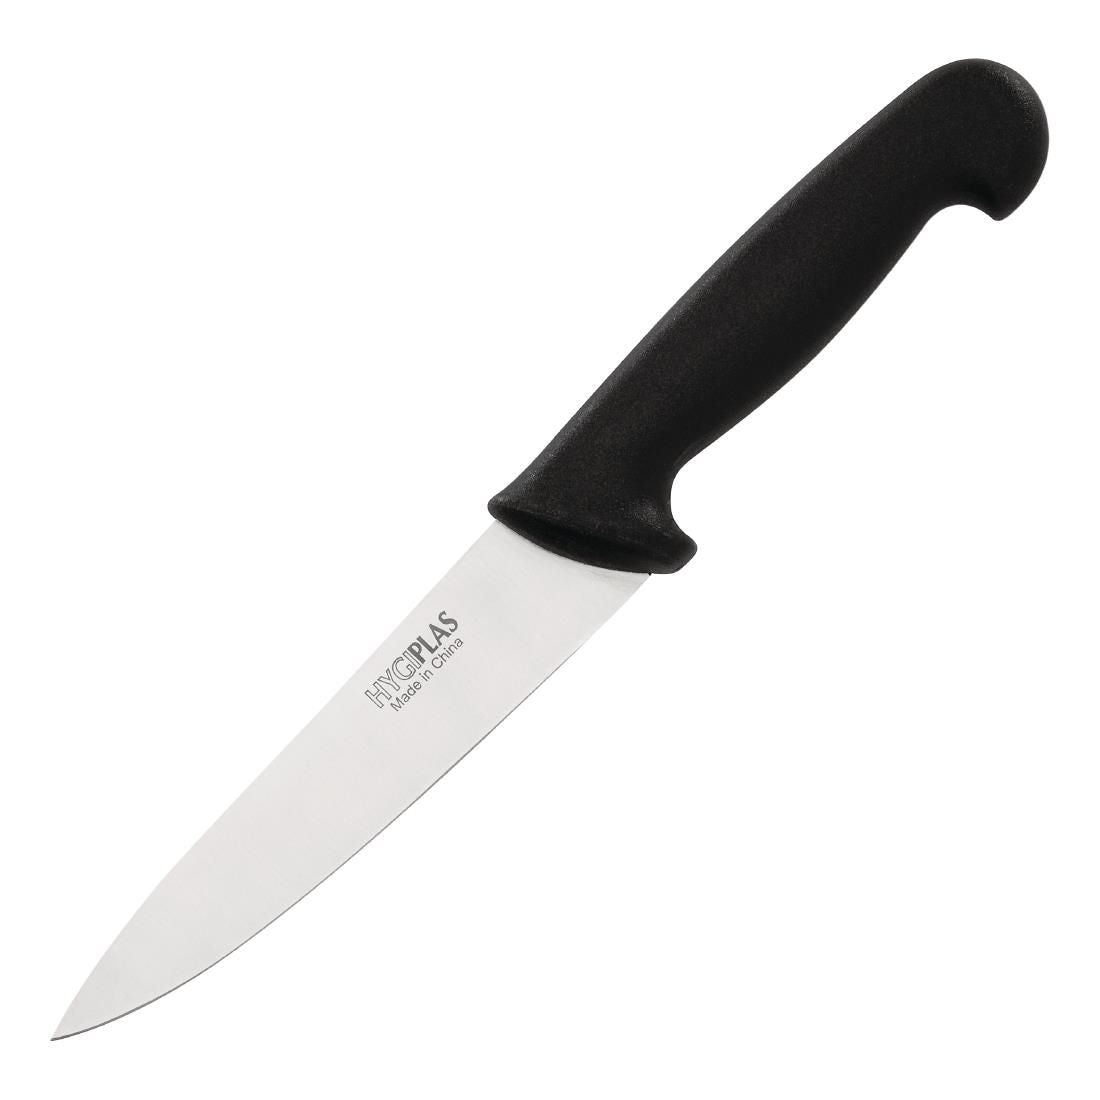 Hygiplas Chefs Knife Black 15.5cm JD Catering Equipment Solutions Ltd